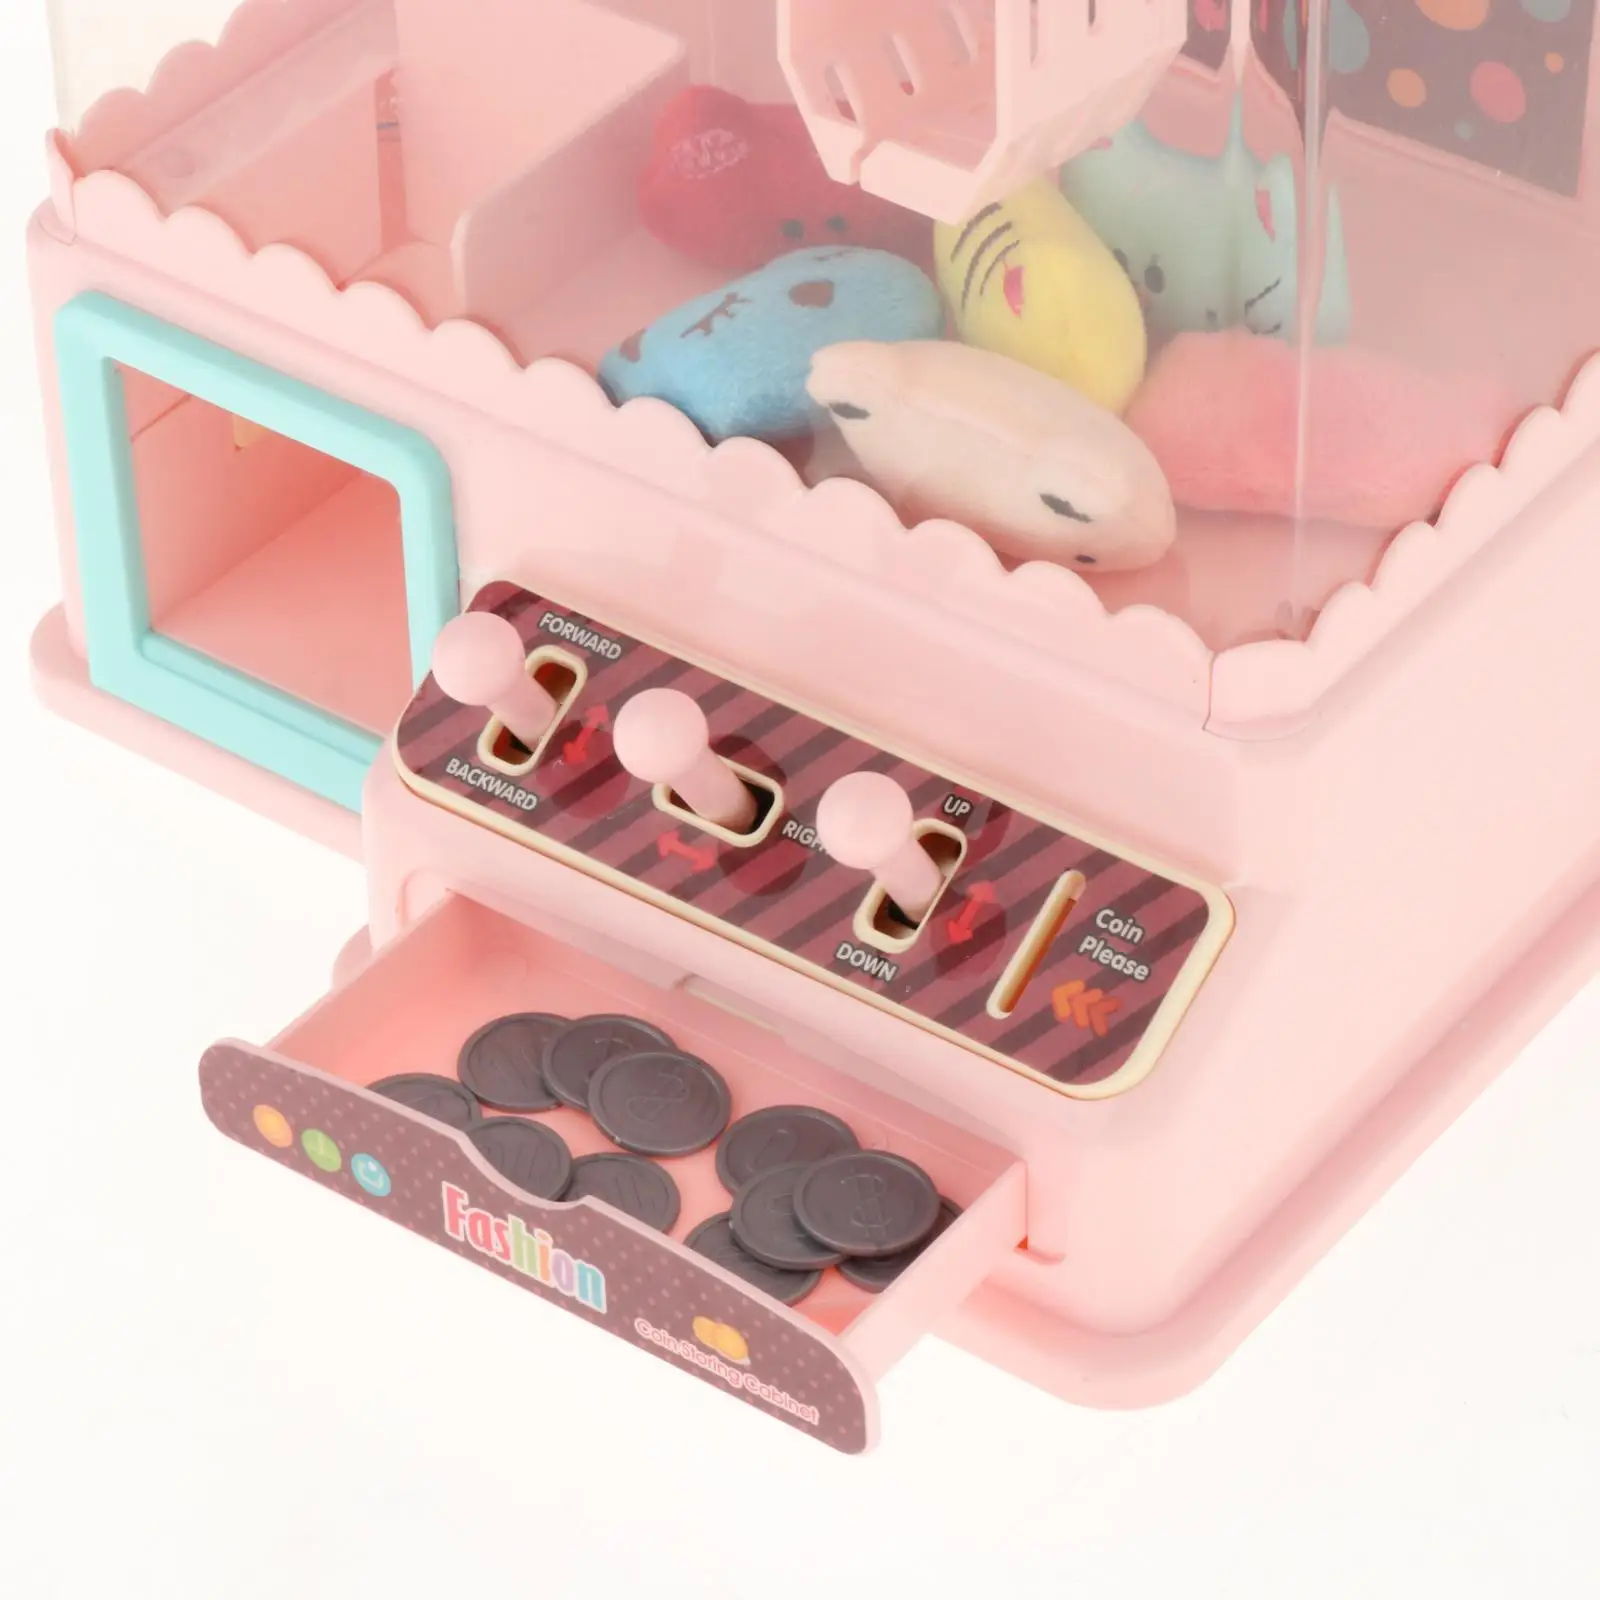 Mini Arcade Machine Grab Doll Clip Manual Claw Machine Toy for Birthday Gifts